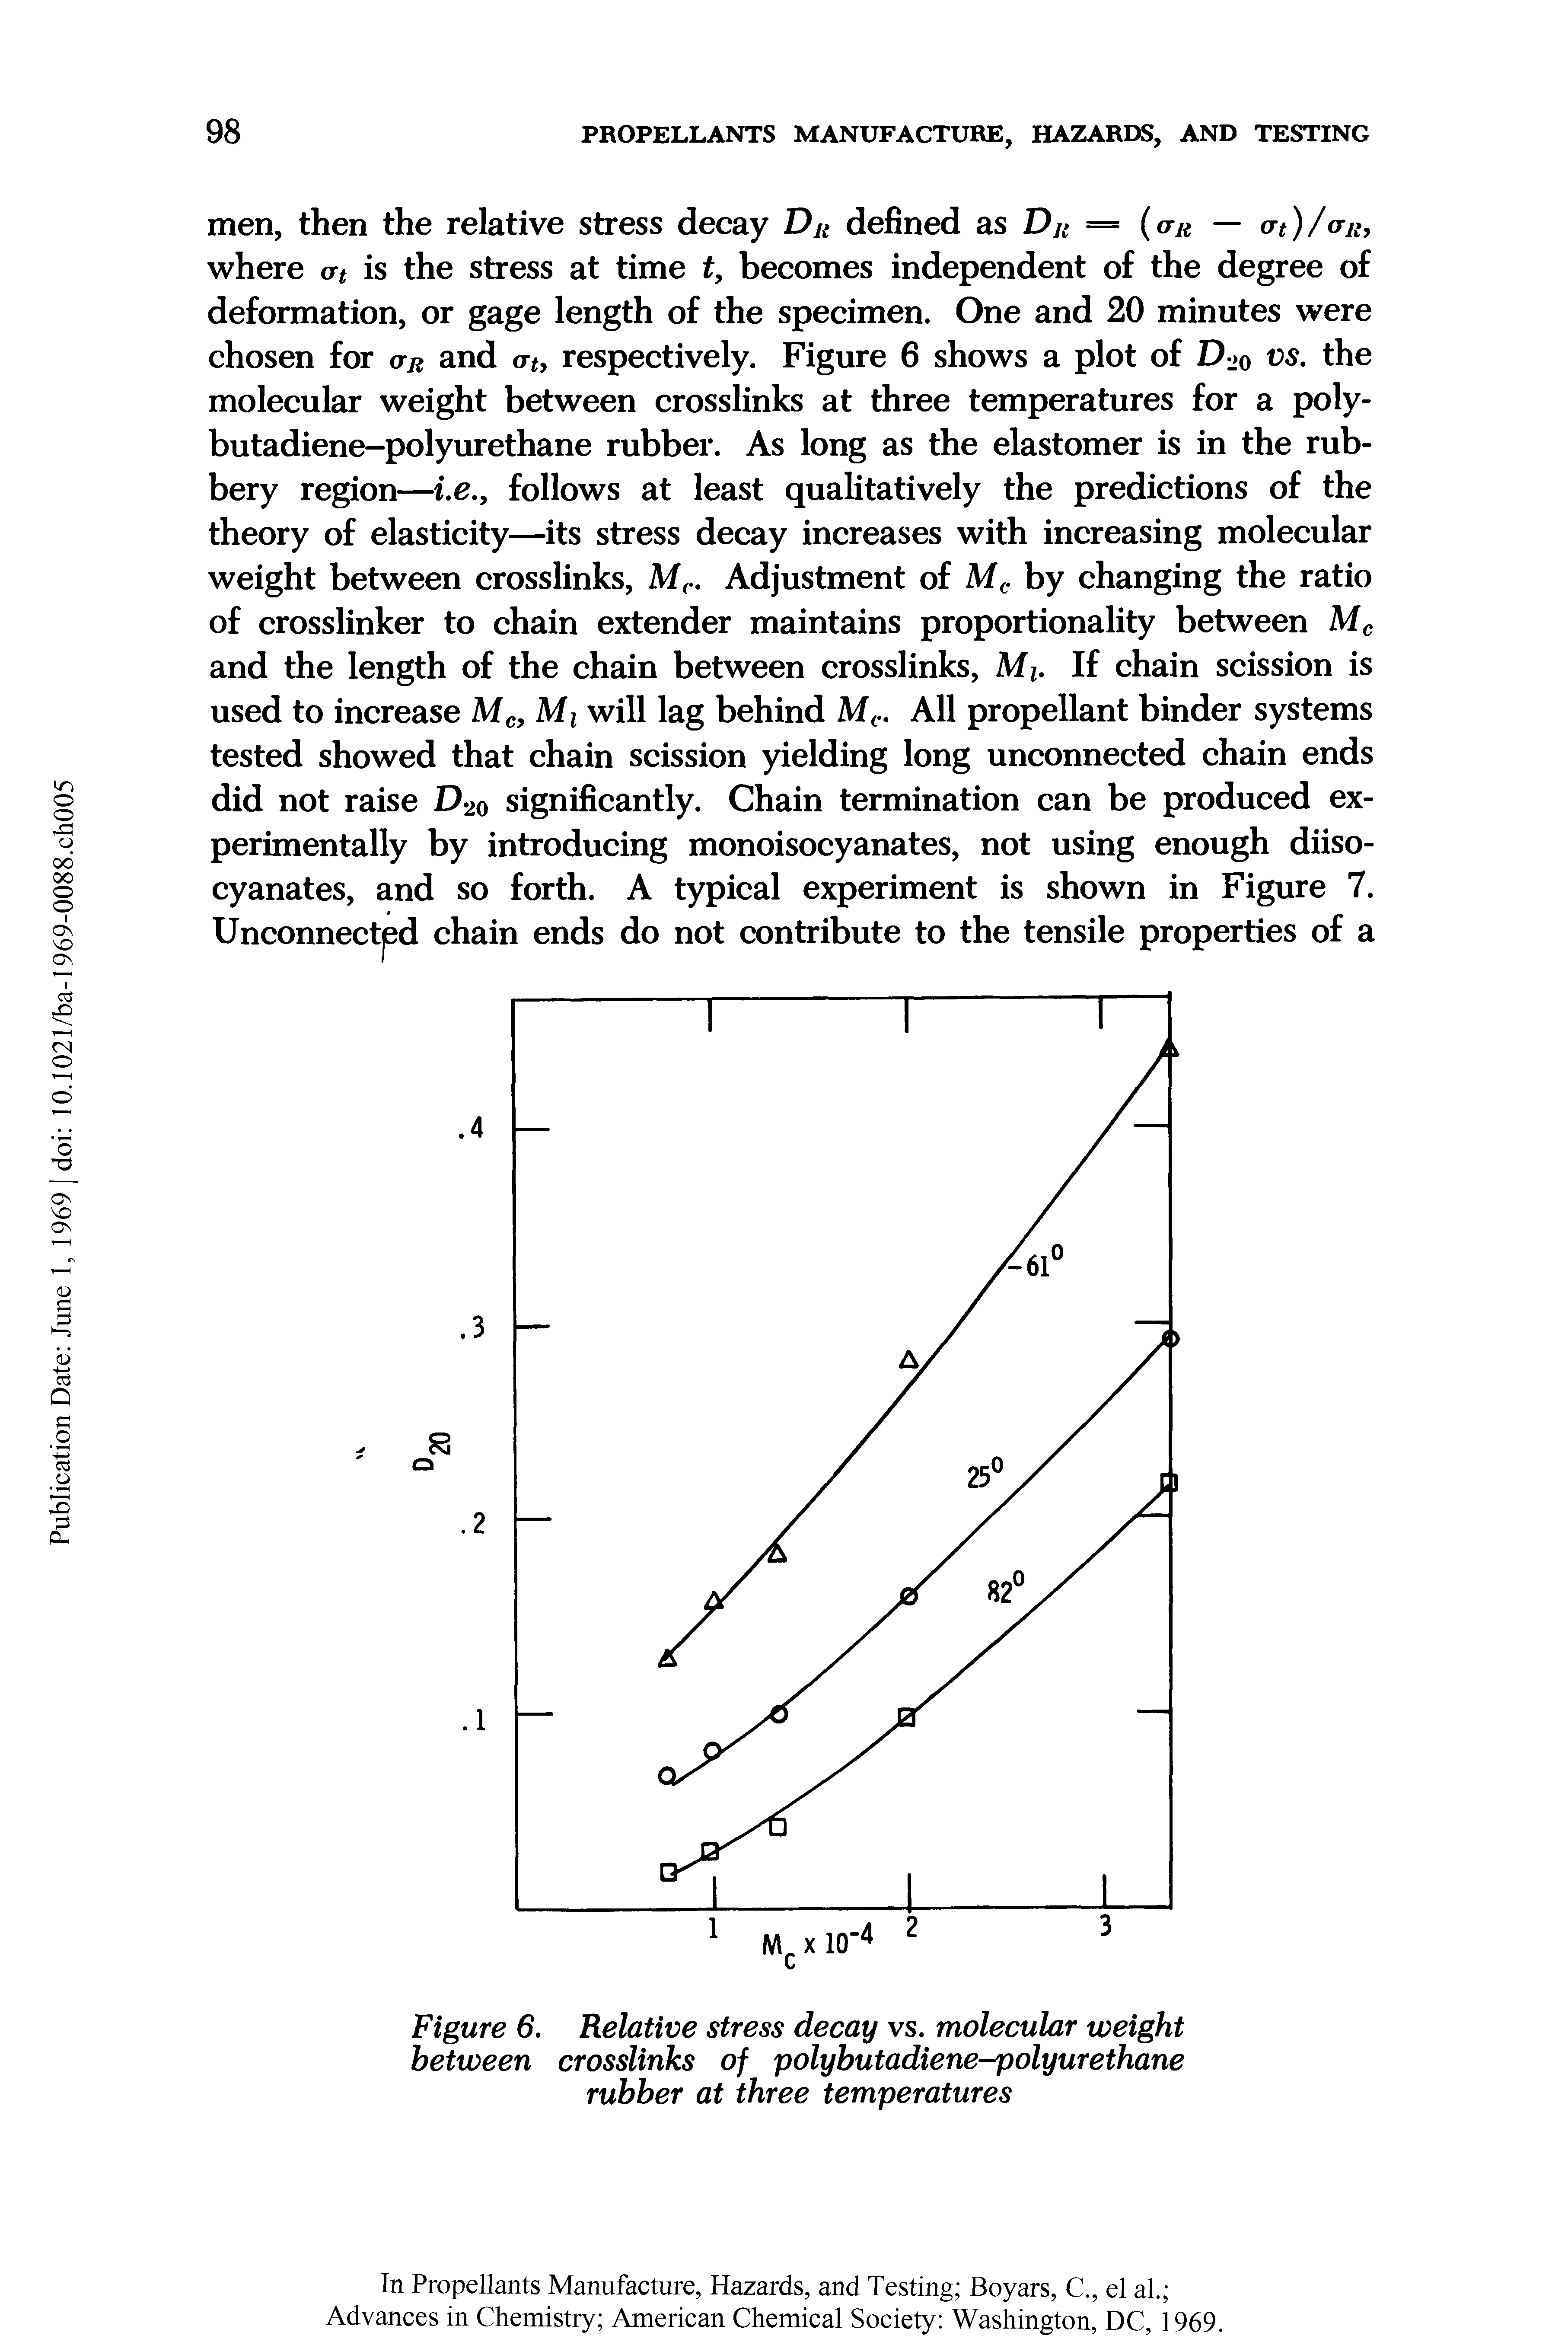 Figure 6. Relative stress decay vs. molecular weight between crosslinks of polybutadiene-polyurethane rubber at three temperatures...